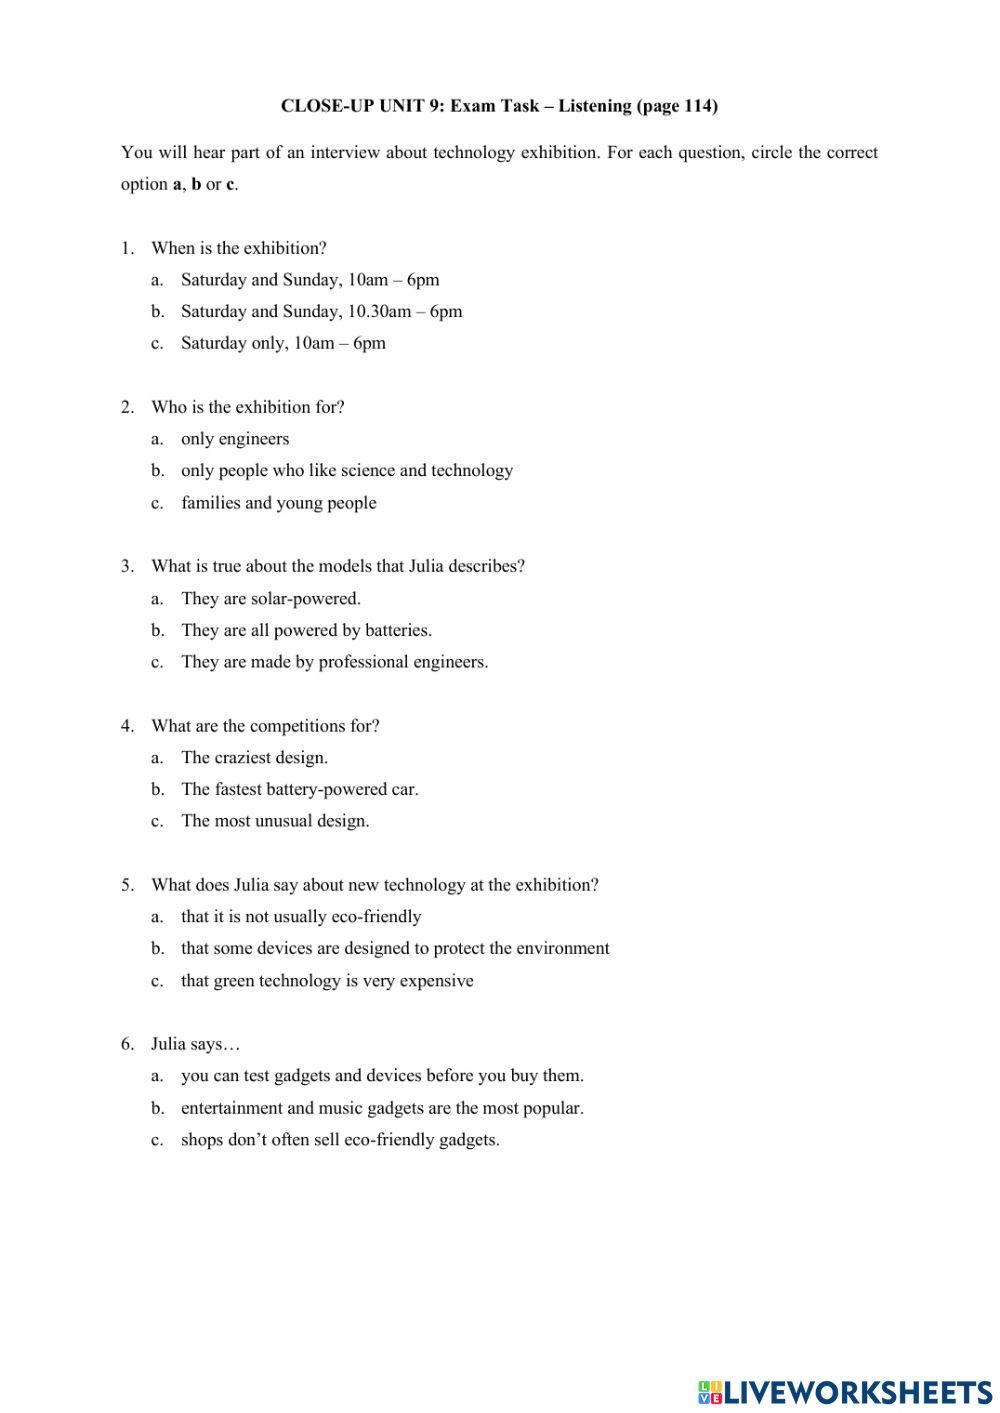 Close-Up Unit 9: Exam Task page 114